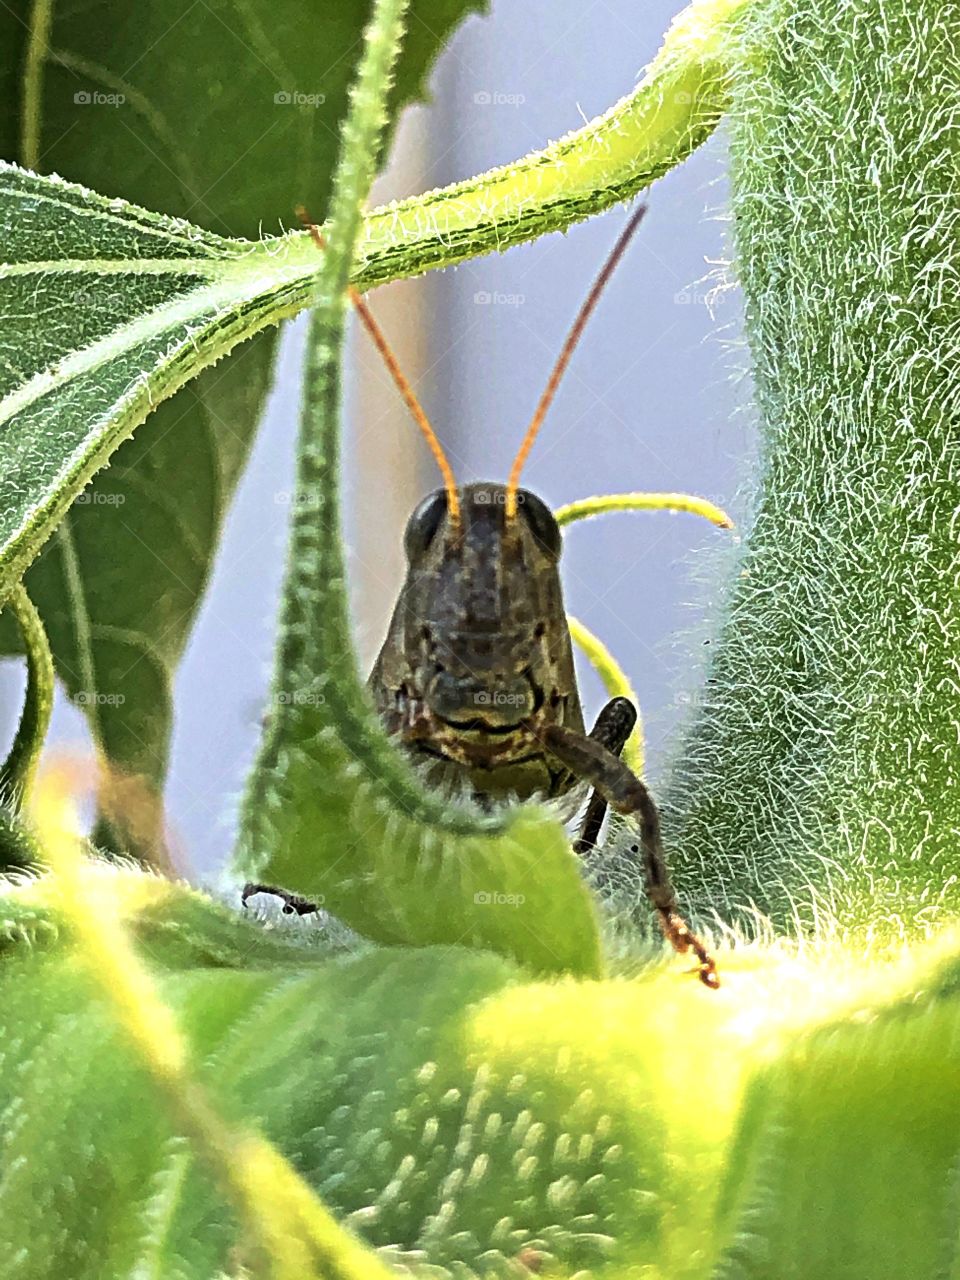 Grasshopper face